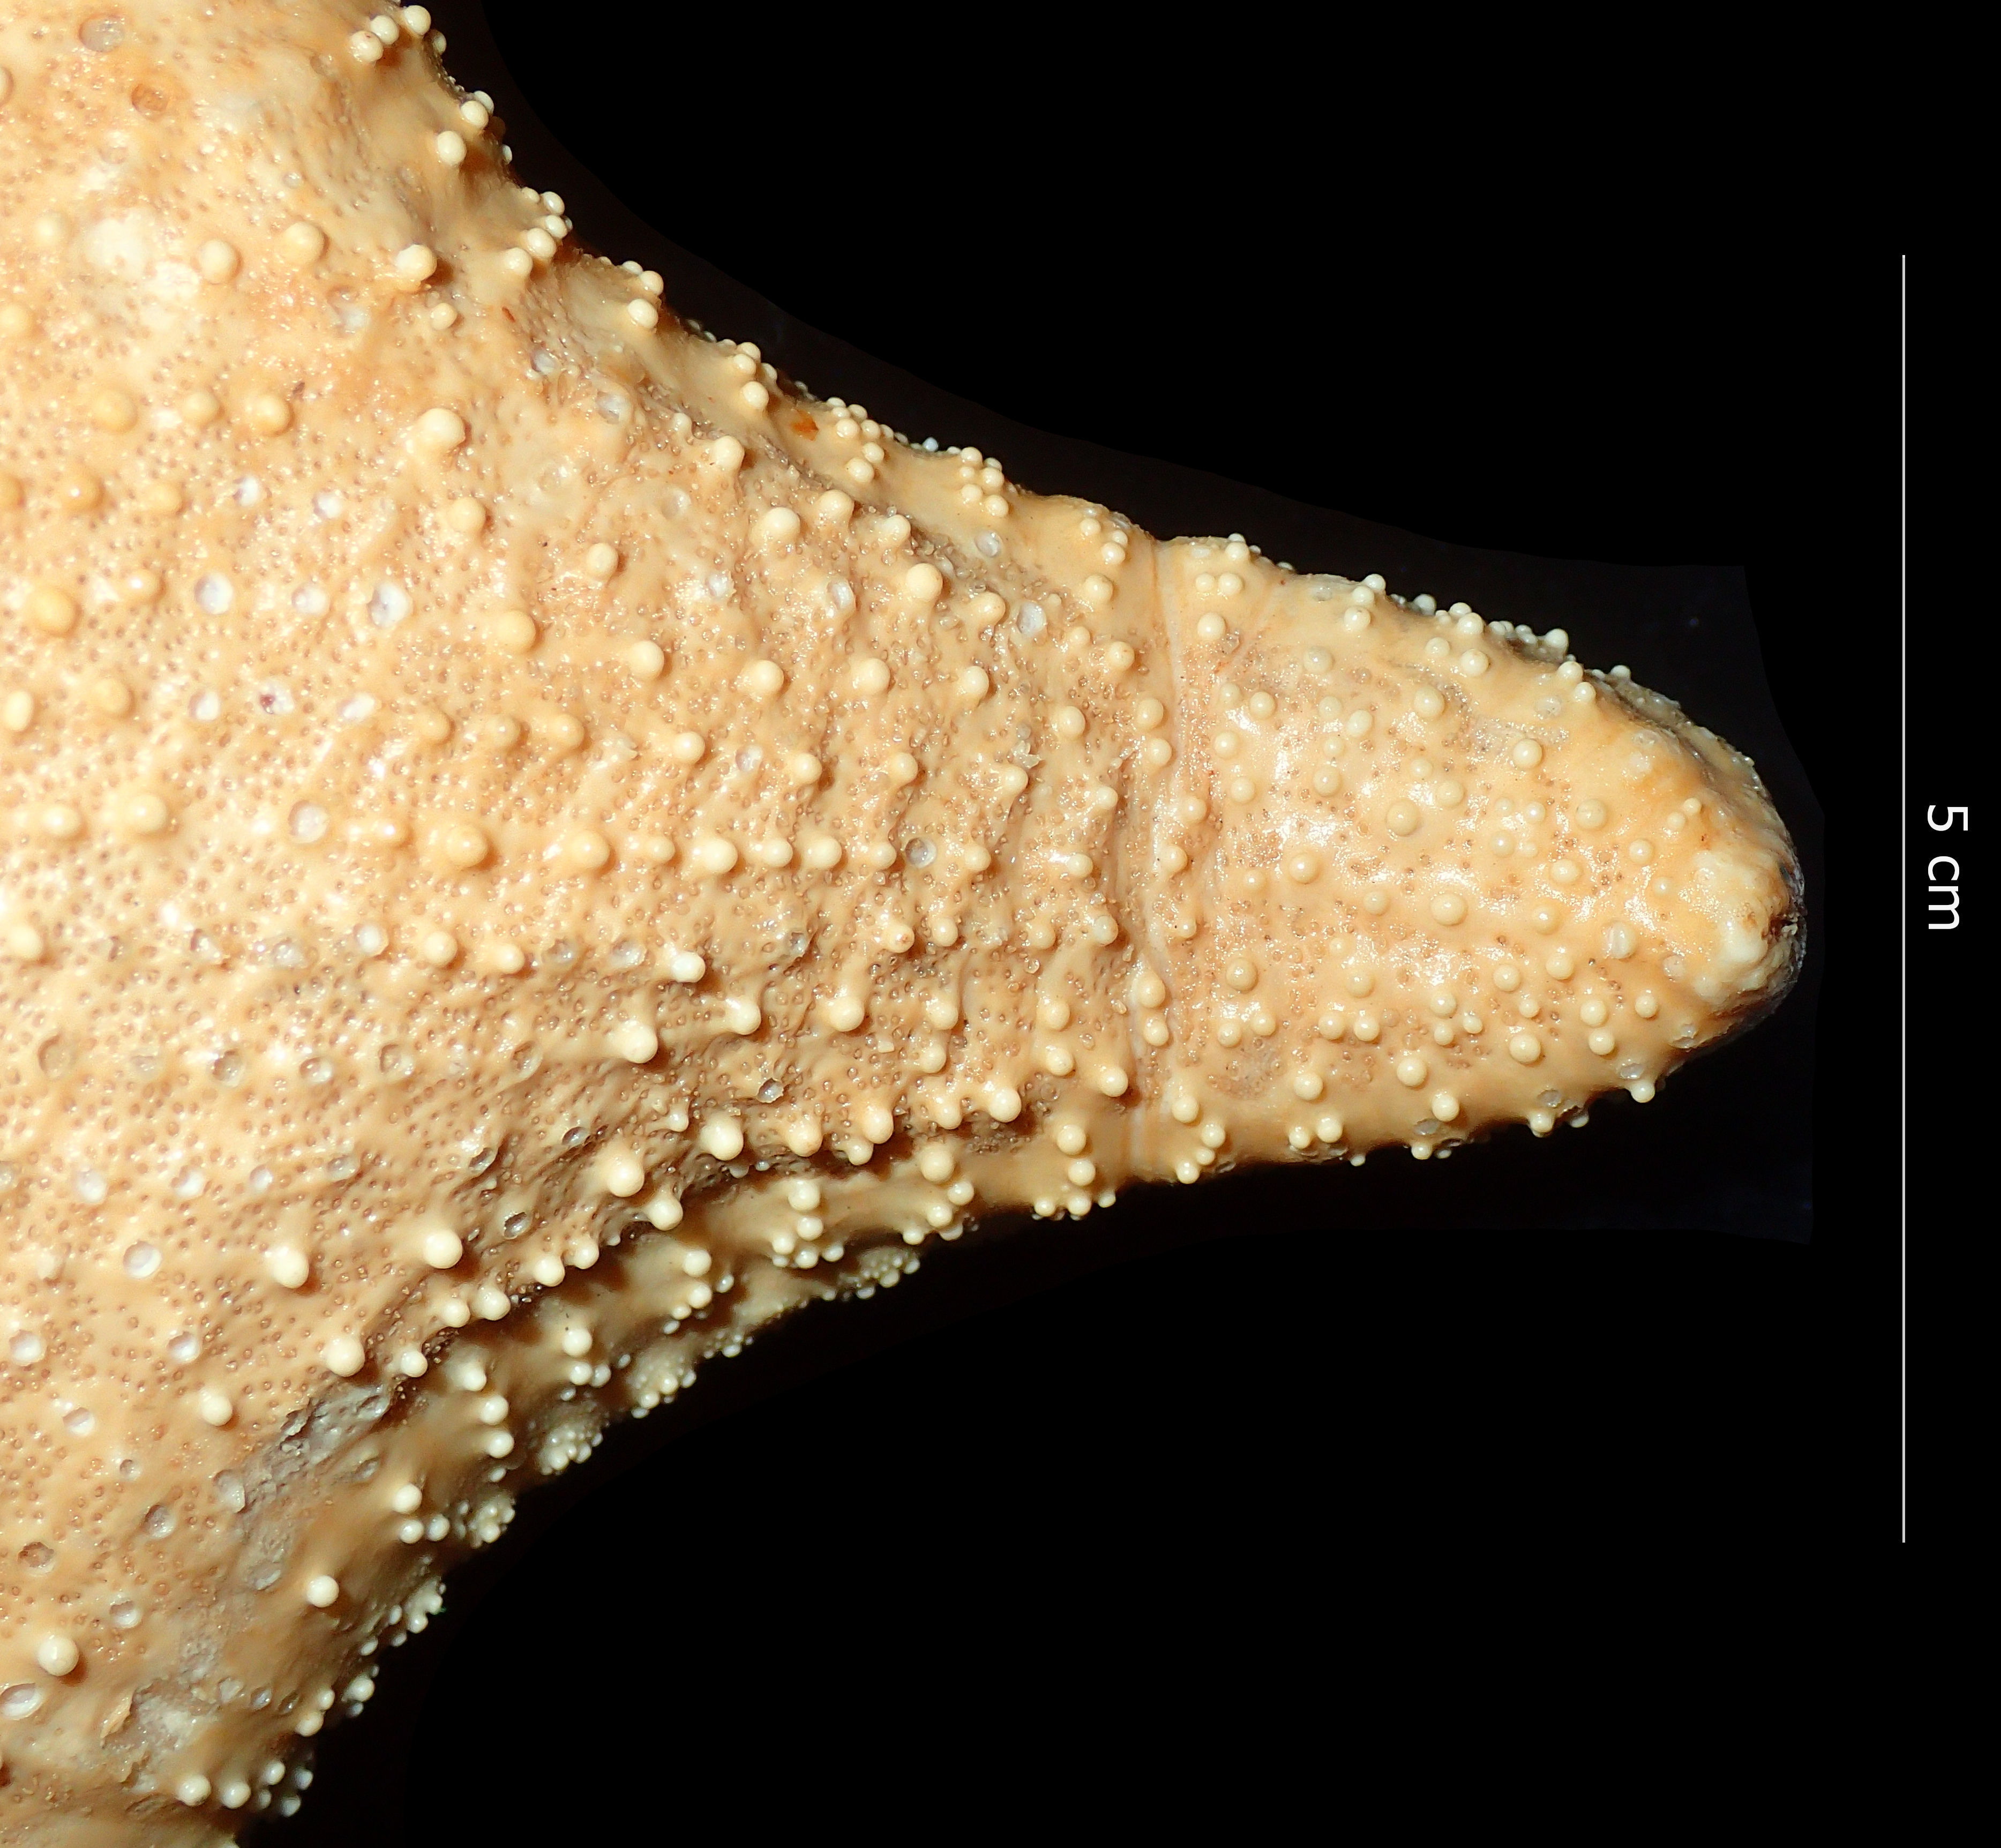 BE-RBINS-INV HOLOTYPE AST.442 Anthenea tuberculosa var. vanstraeleni arm dorsal view.jpg